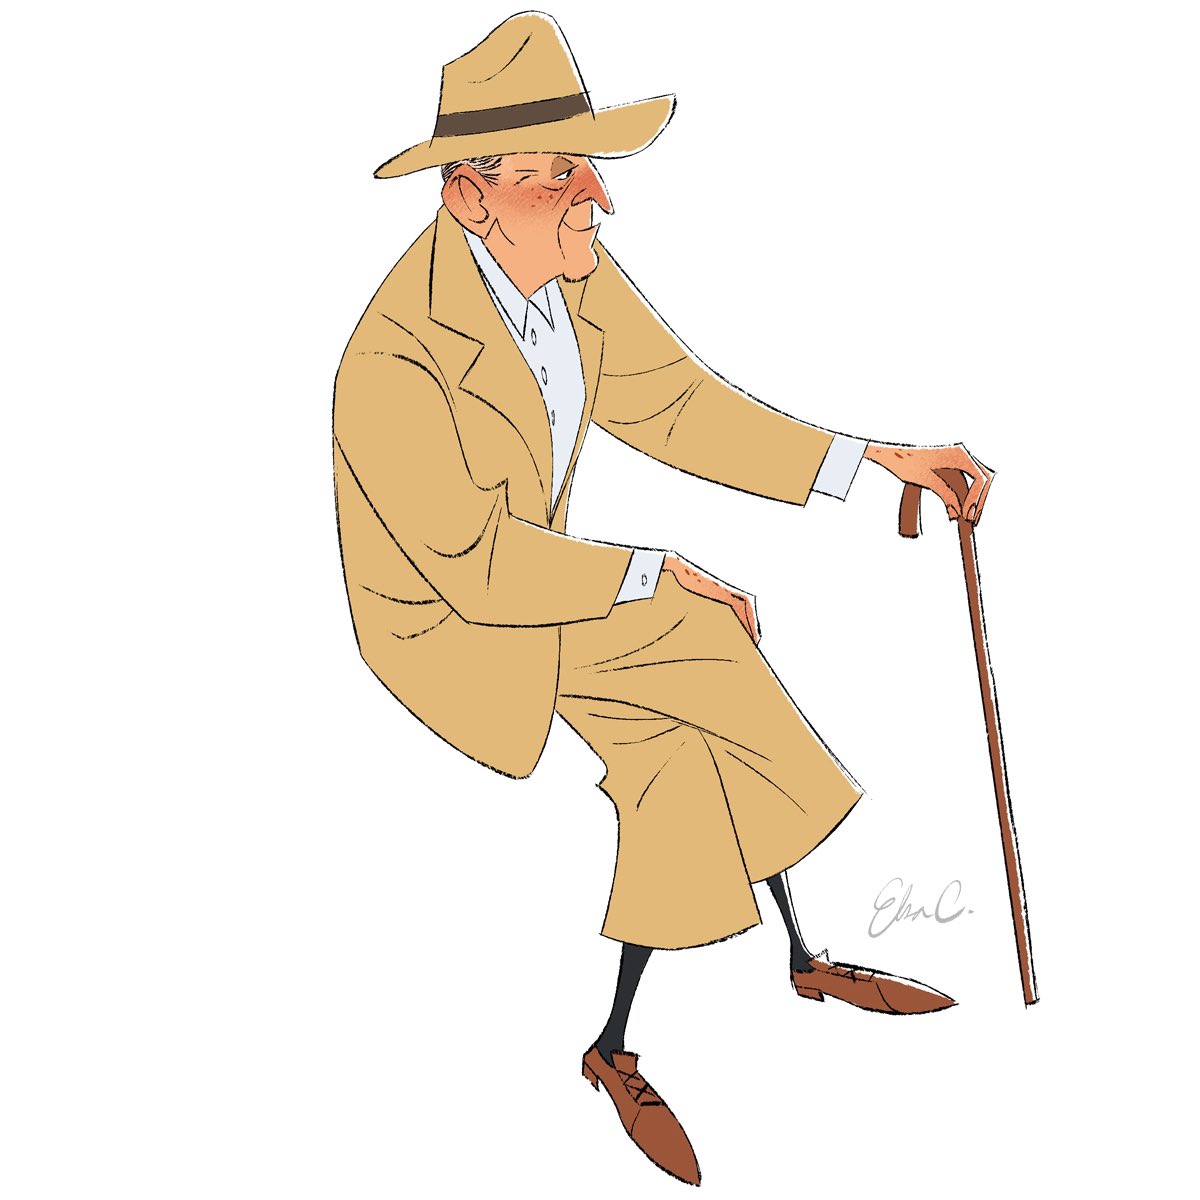 cane old hat 1boy solo male focus old man  illustration images